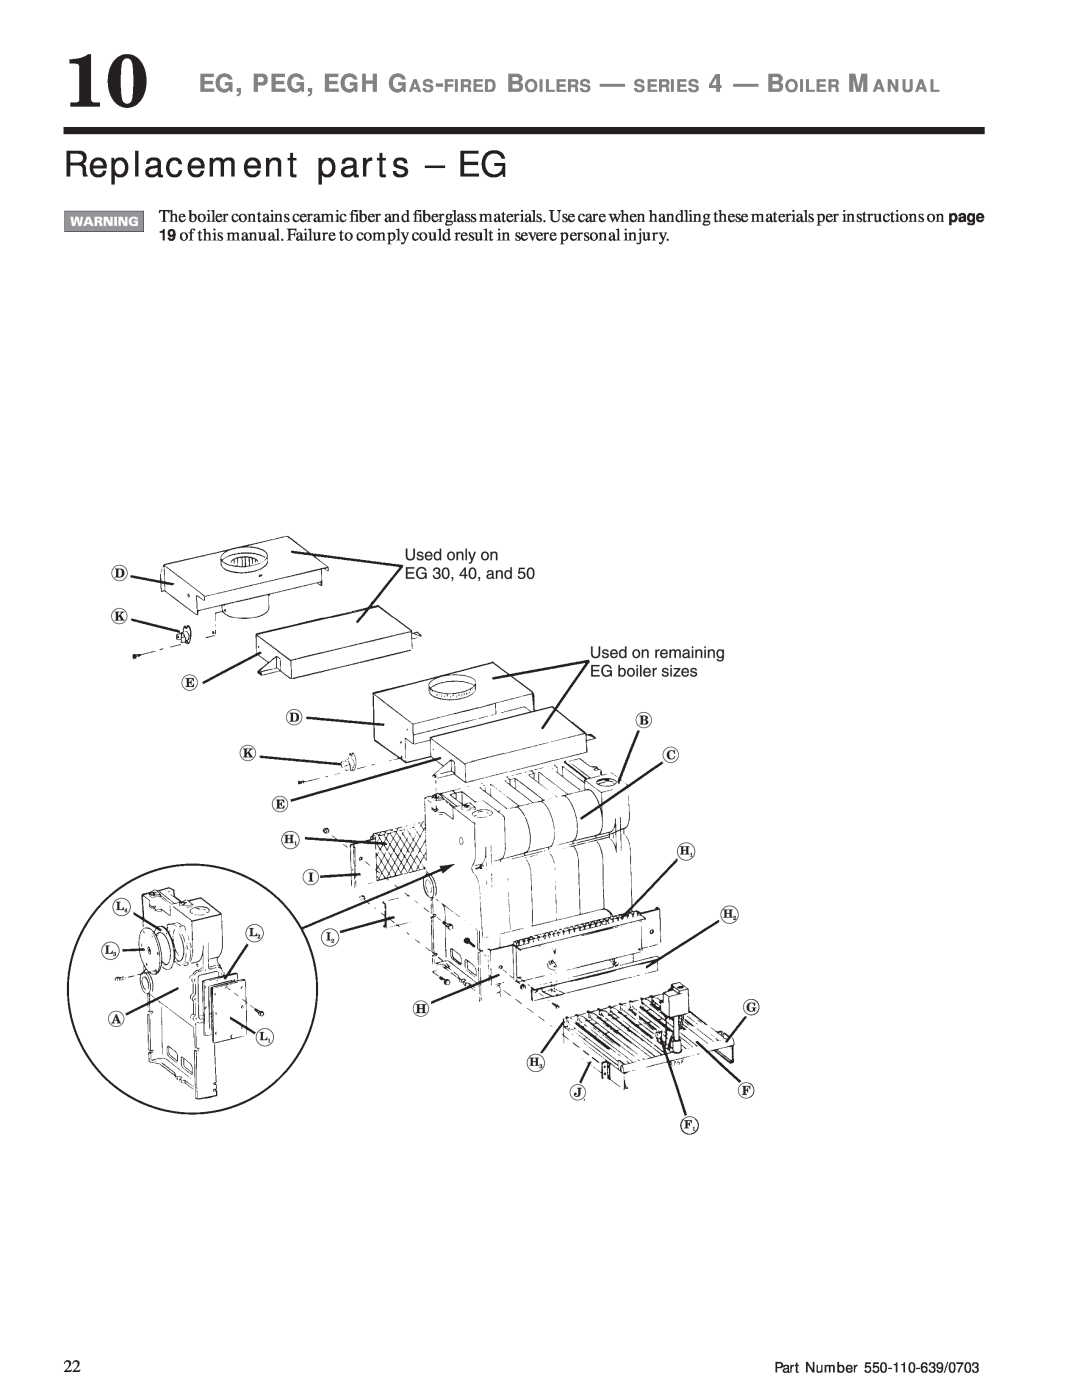 Weil-McLain manual Replacement parts - EG, Part Number 550-110-639/0703 